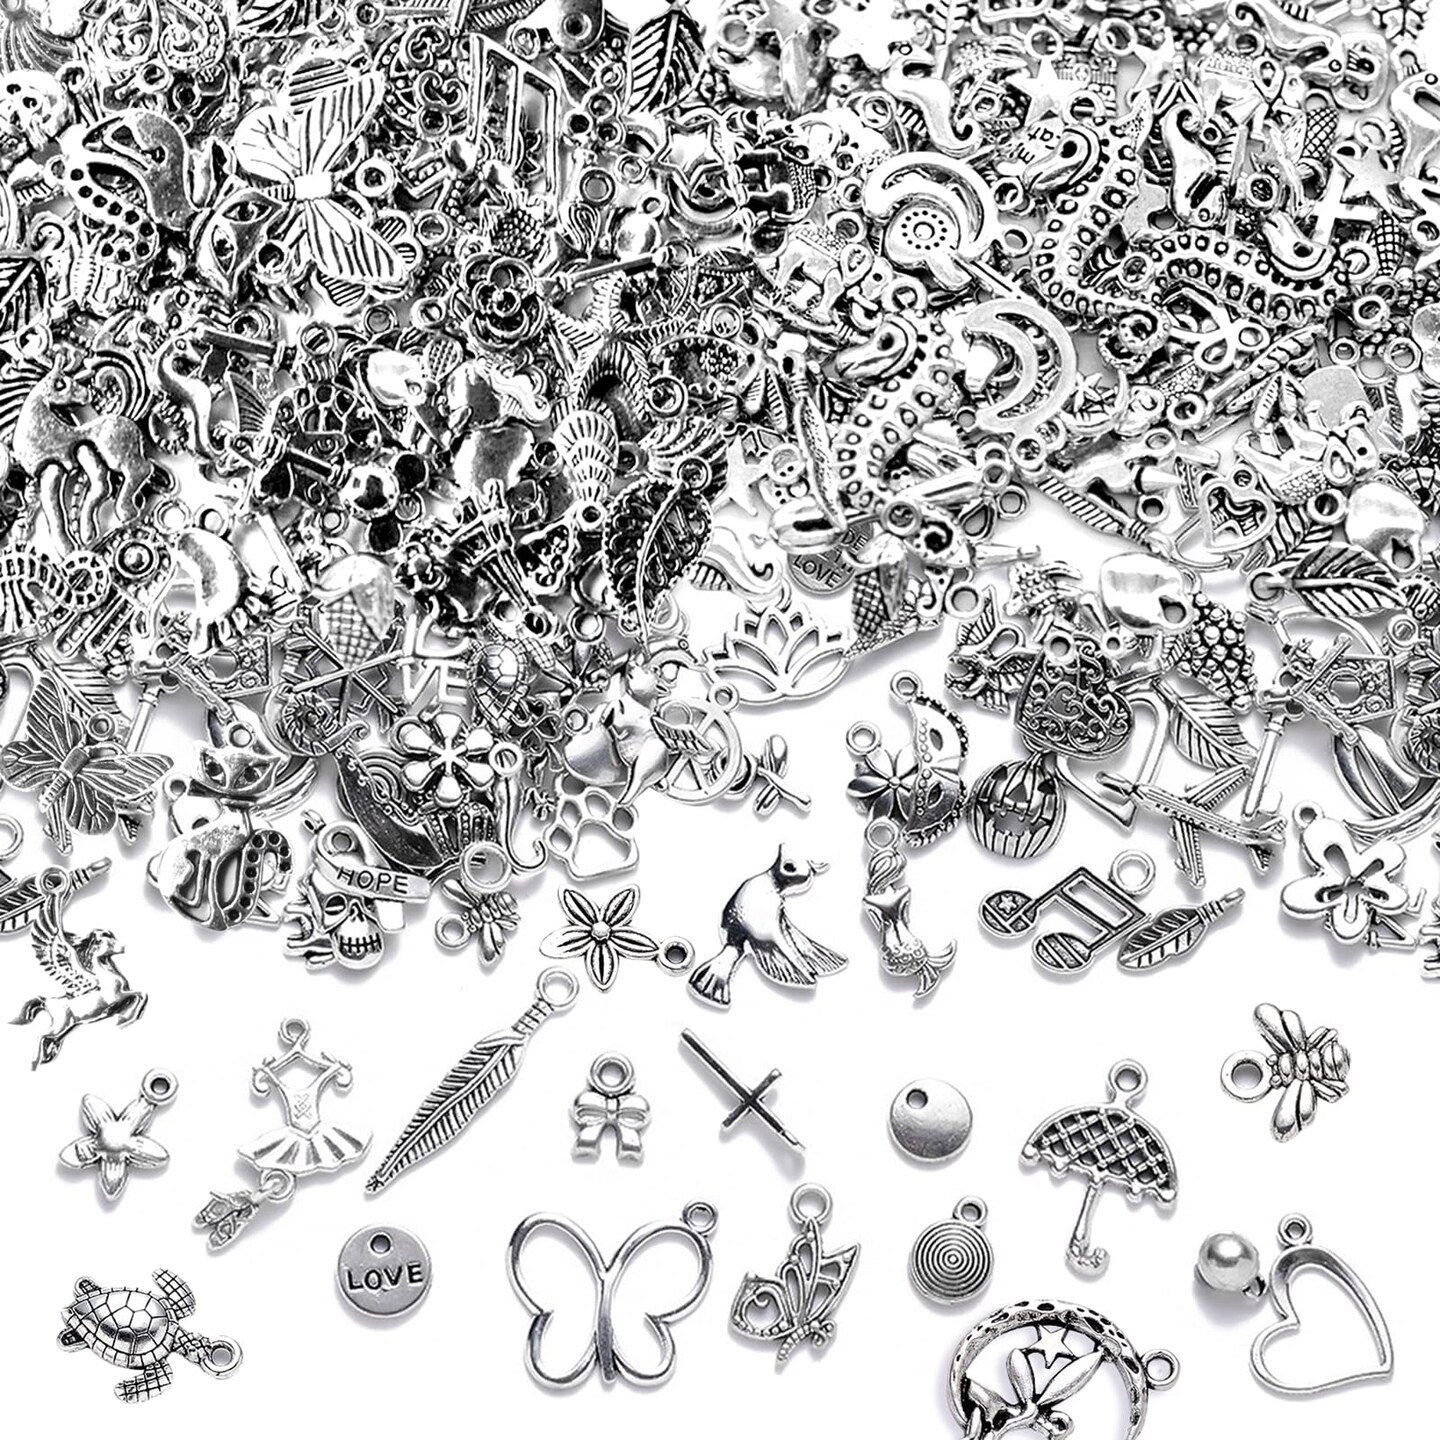 NEPAK 400PCS Wholesale Bulk Lots Jewelry Making Silver Charms